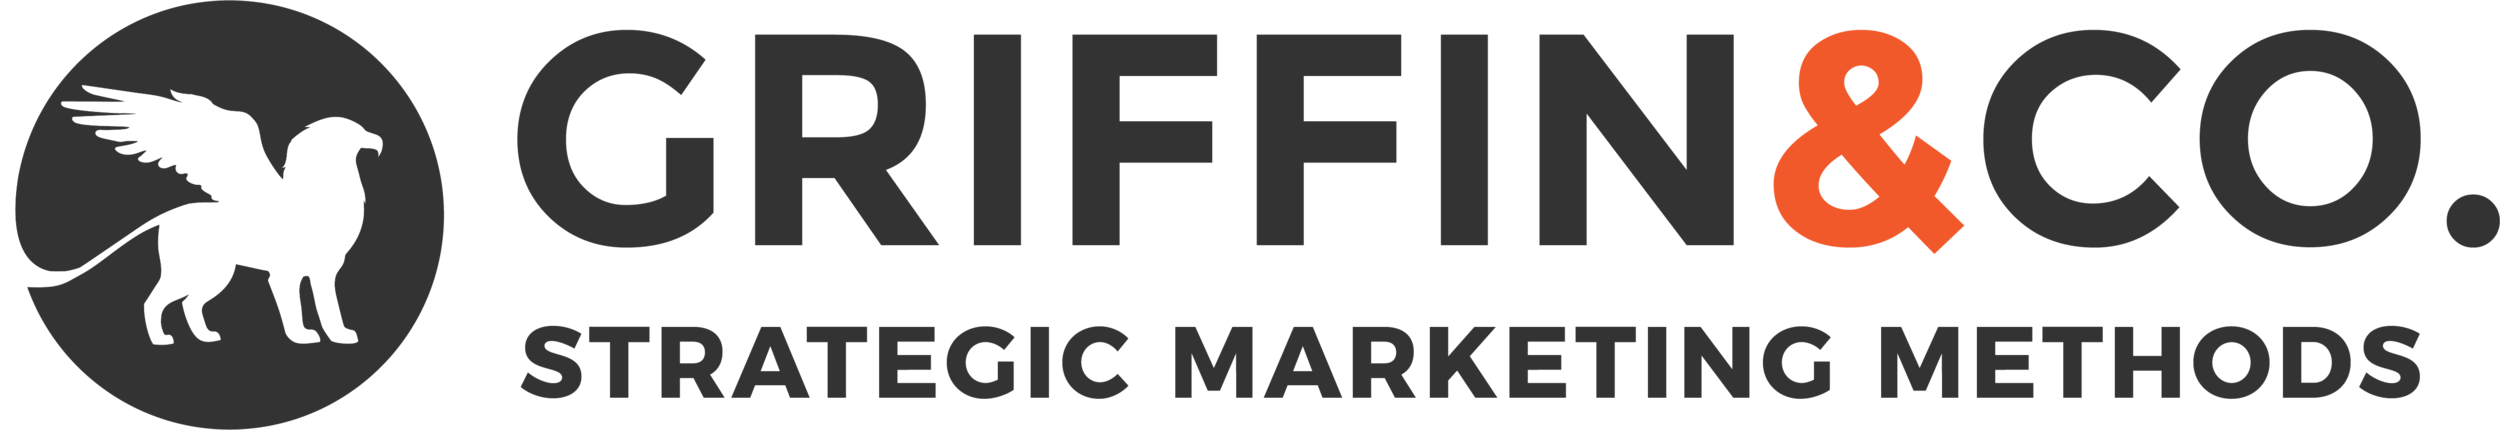 Griffin &amp; Co. Strategic Marketing Methods